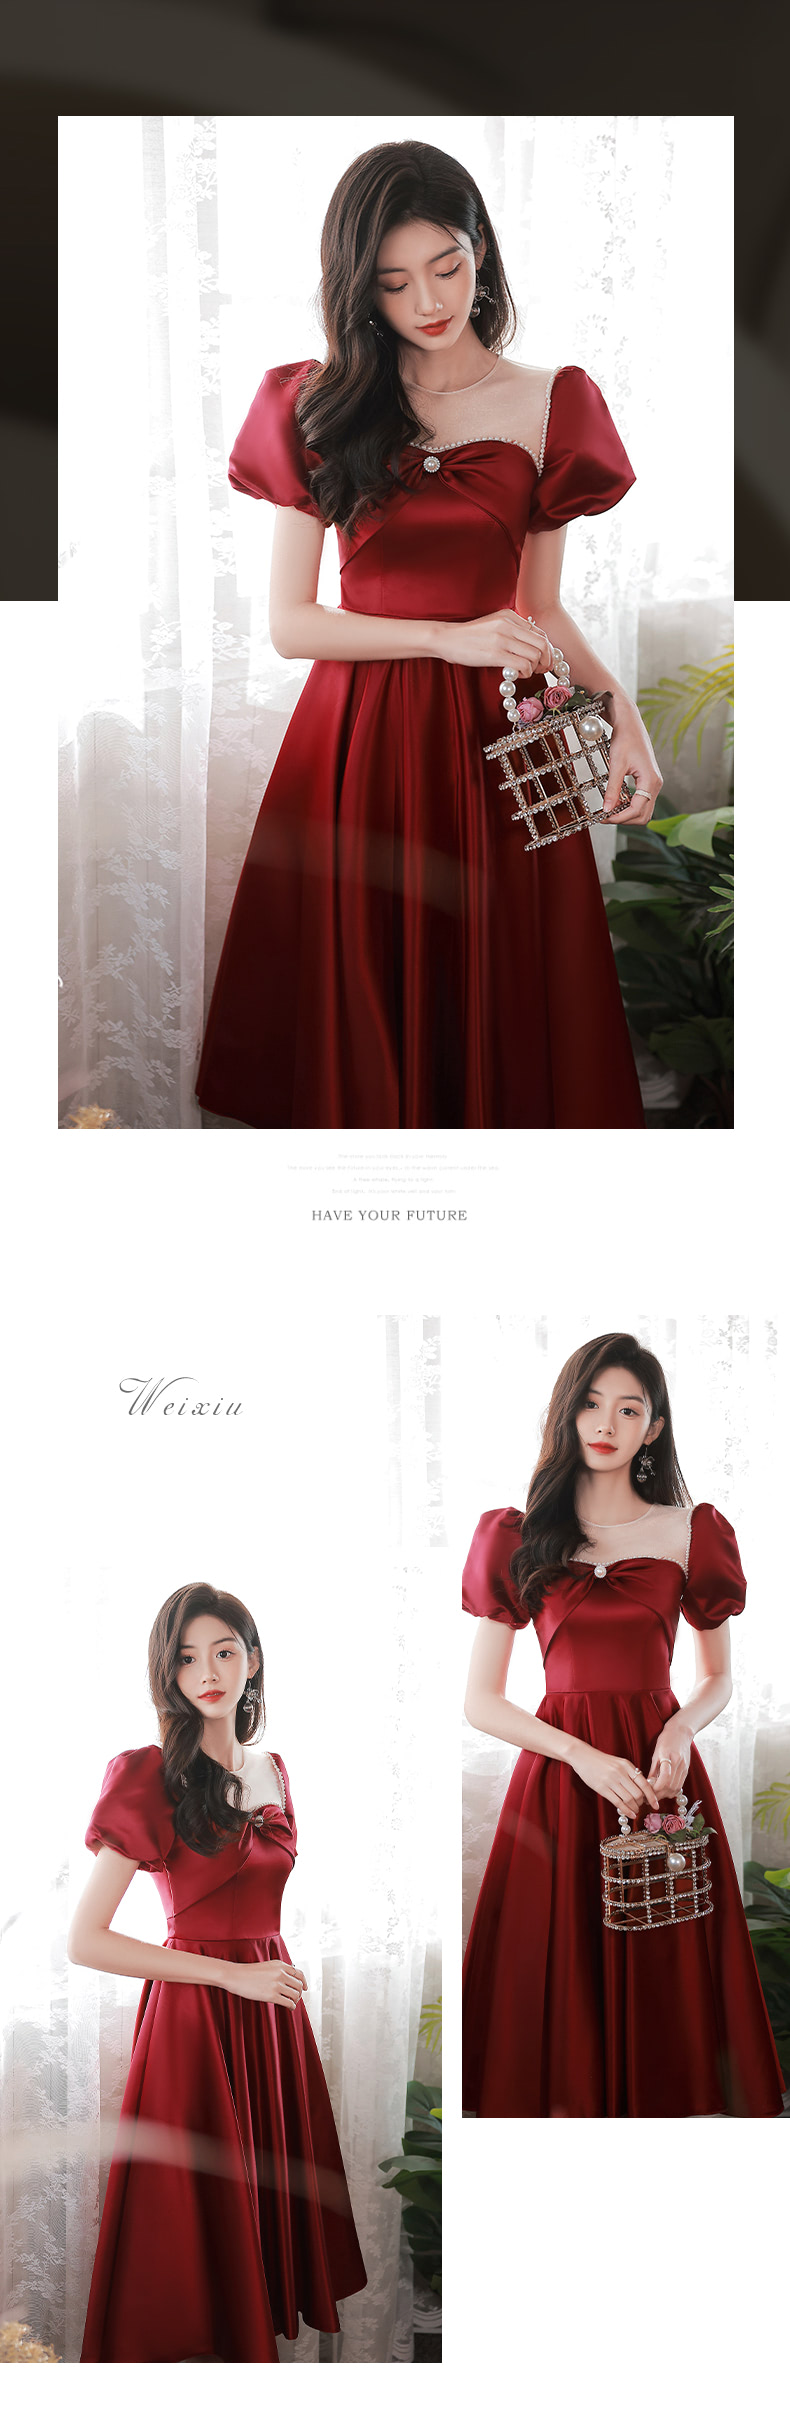 Fashion-Wine-Red-Evening-Gown-Formal-Midi-Satin-Prom-Dress12.jpg